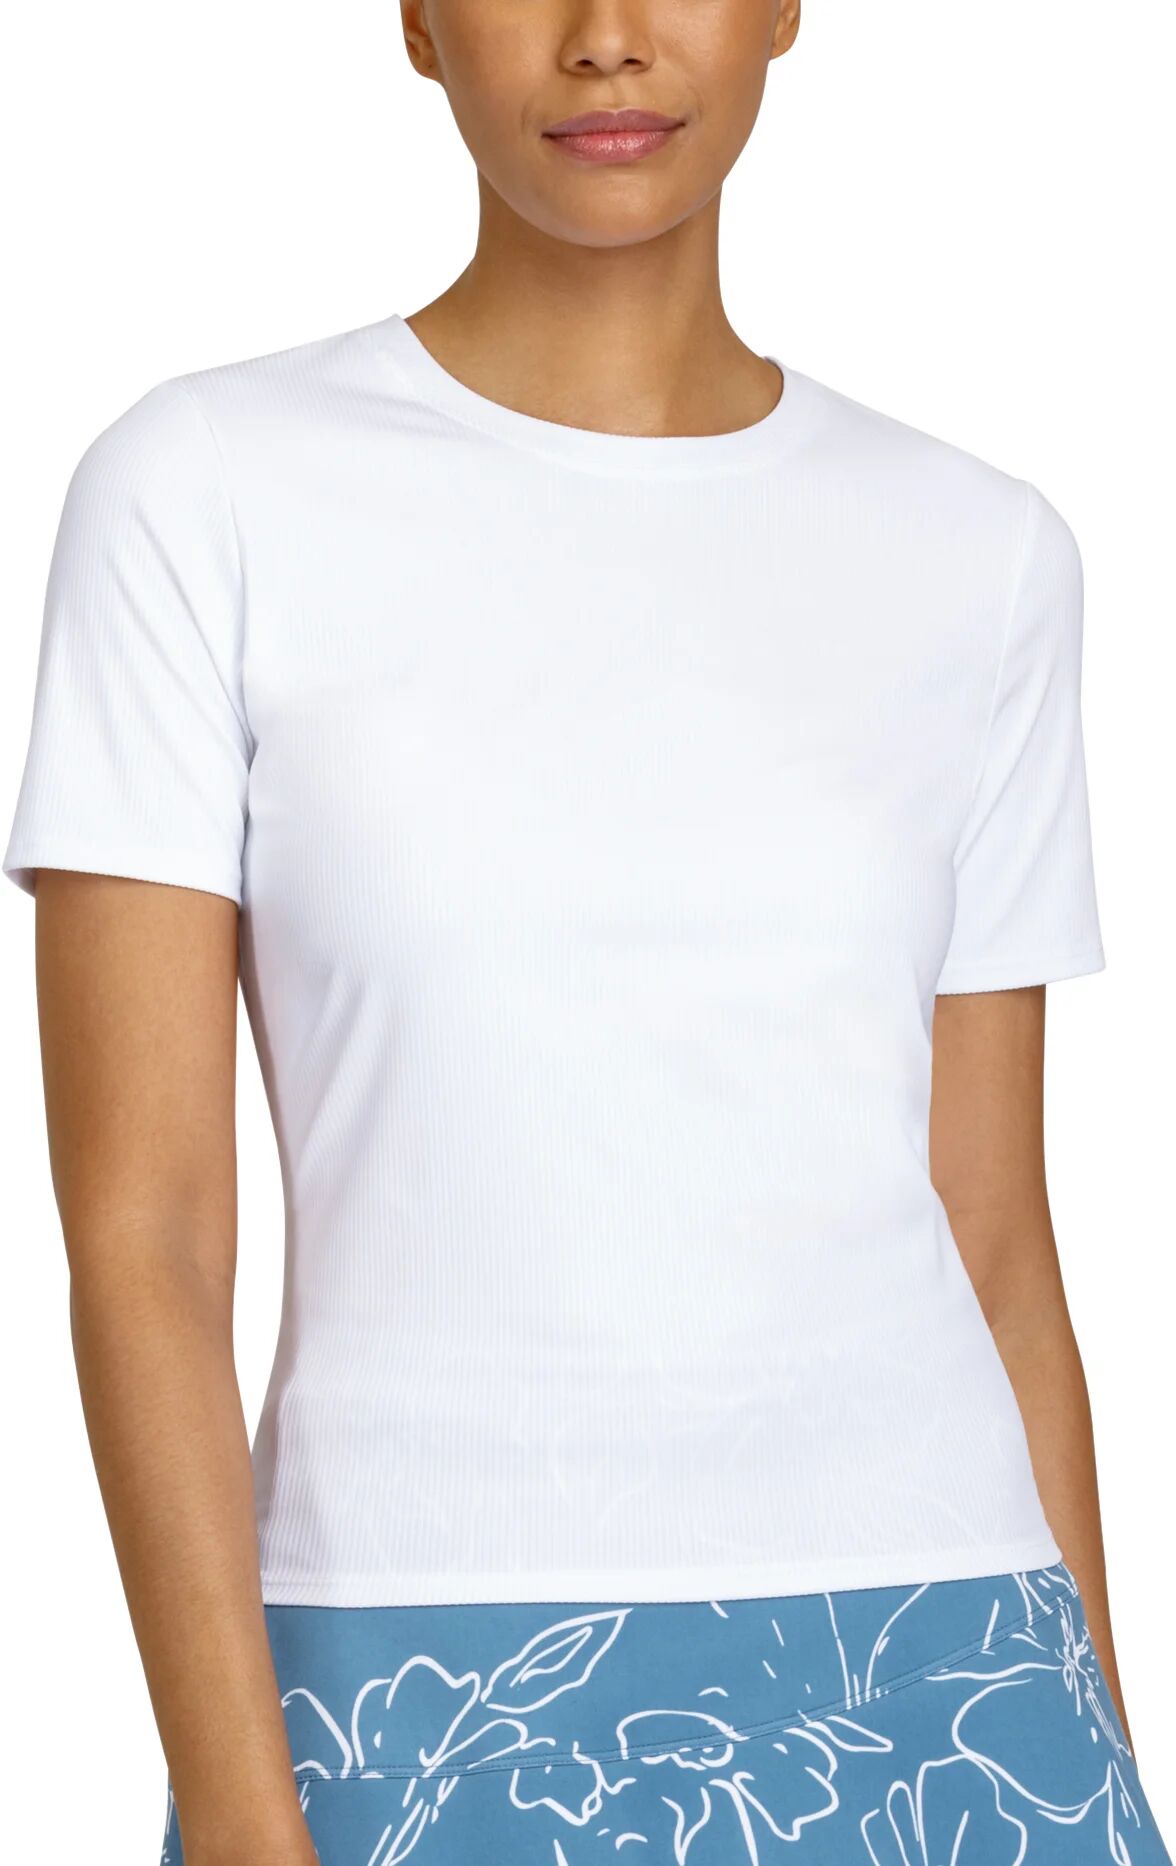 Tail Activewear Womens Geneva Crew Neck Golf Top - White, Size: Large